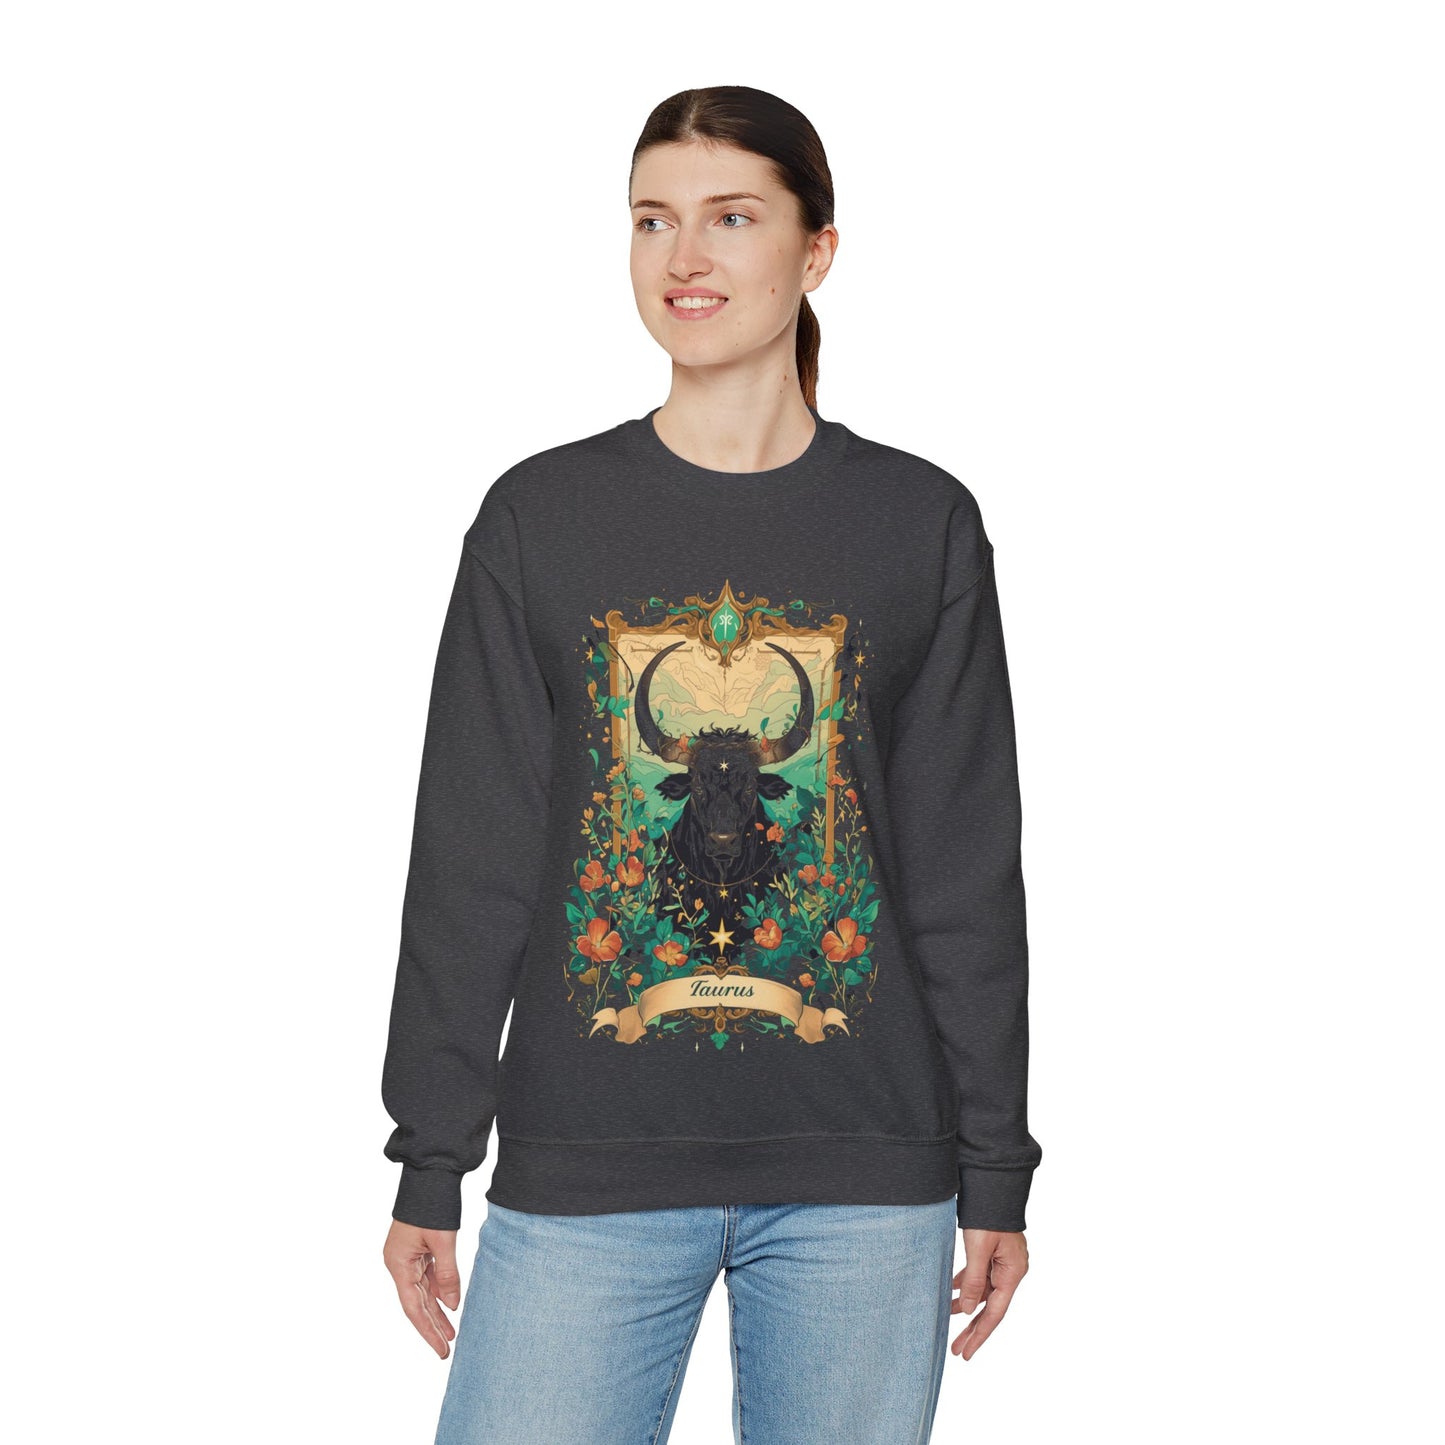 Taurus Blossom: Celestial Garden Astrology Sweater